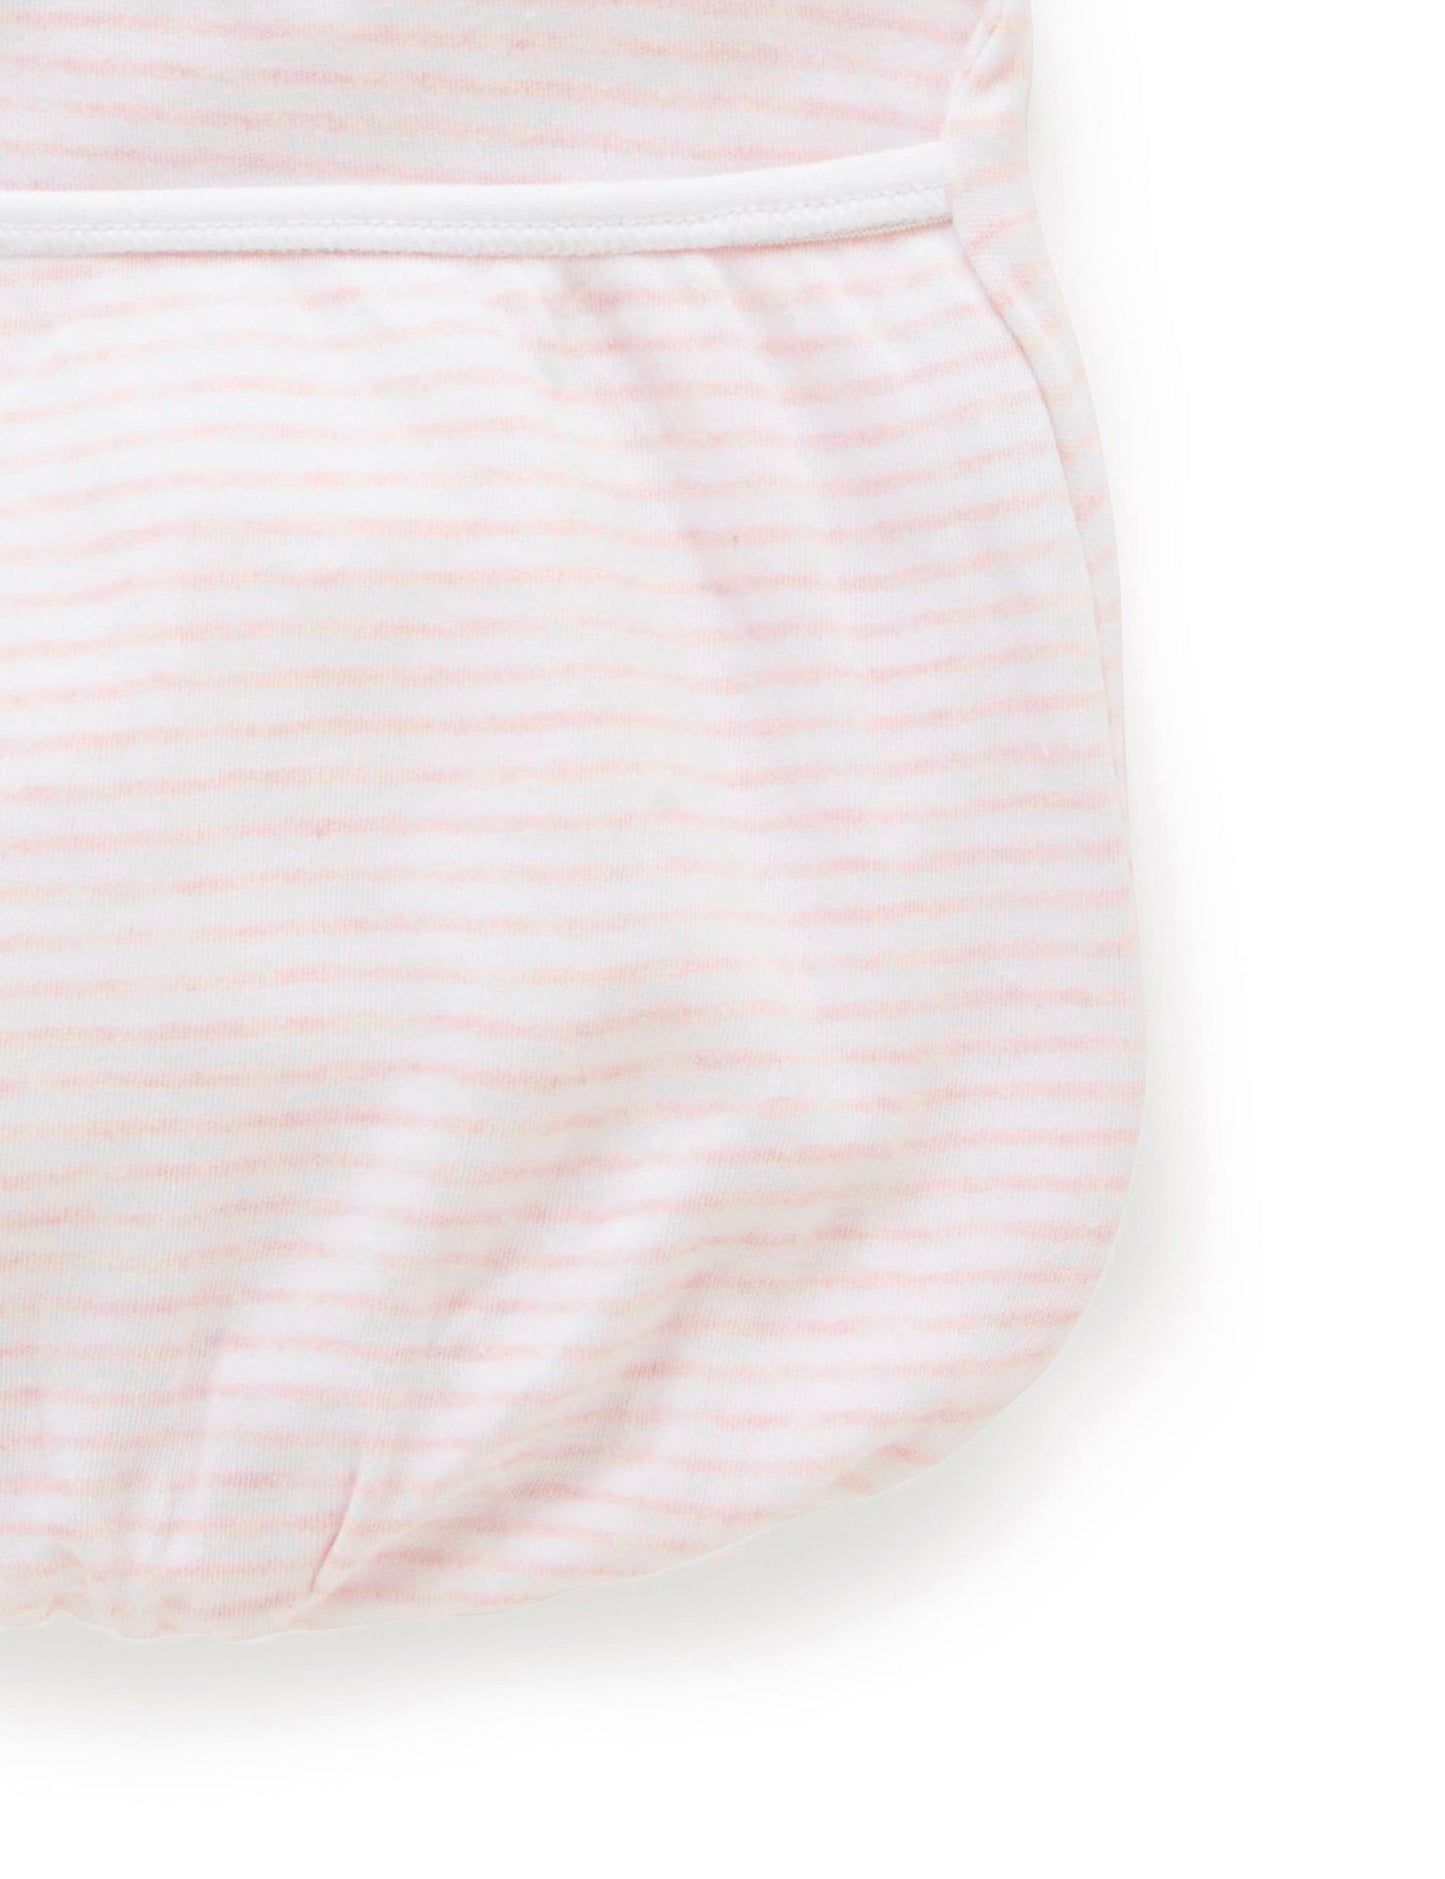 Purebaby Organics Long Sleeve Sleepsuit Pale Pink - 0-3 Months